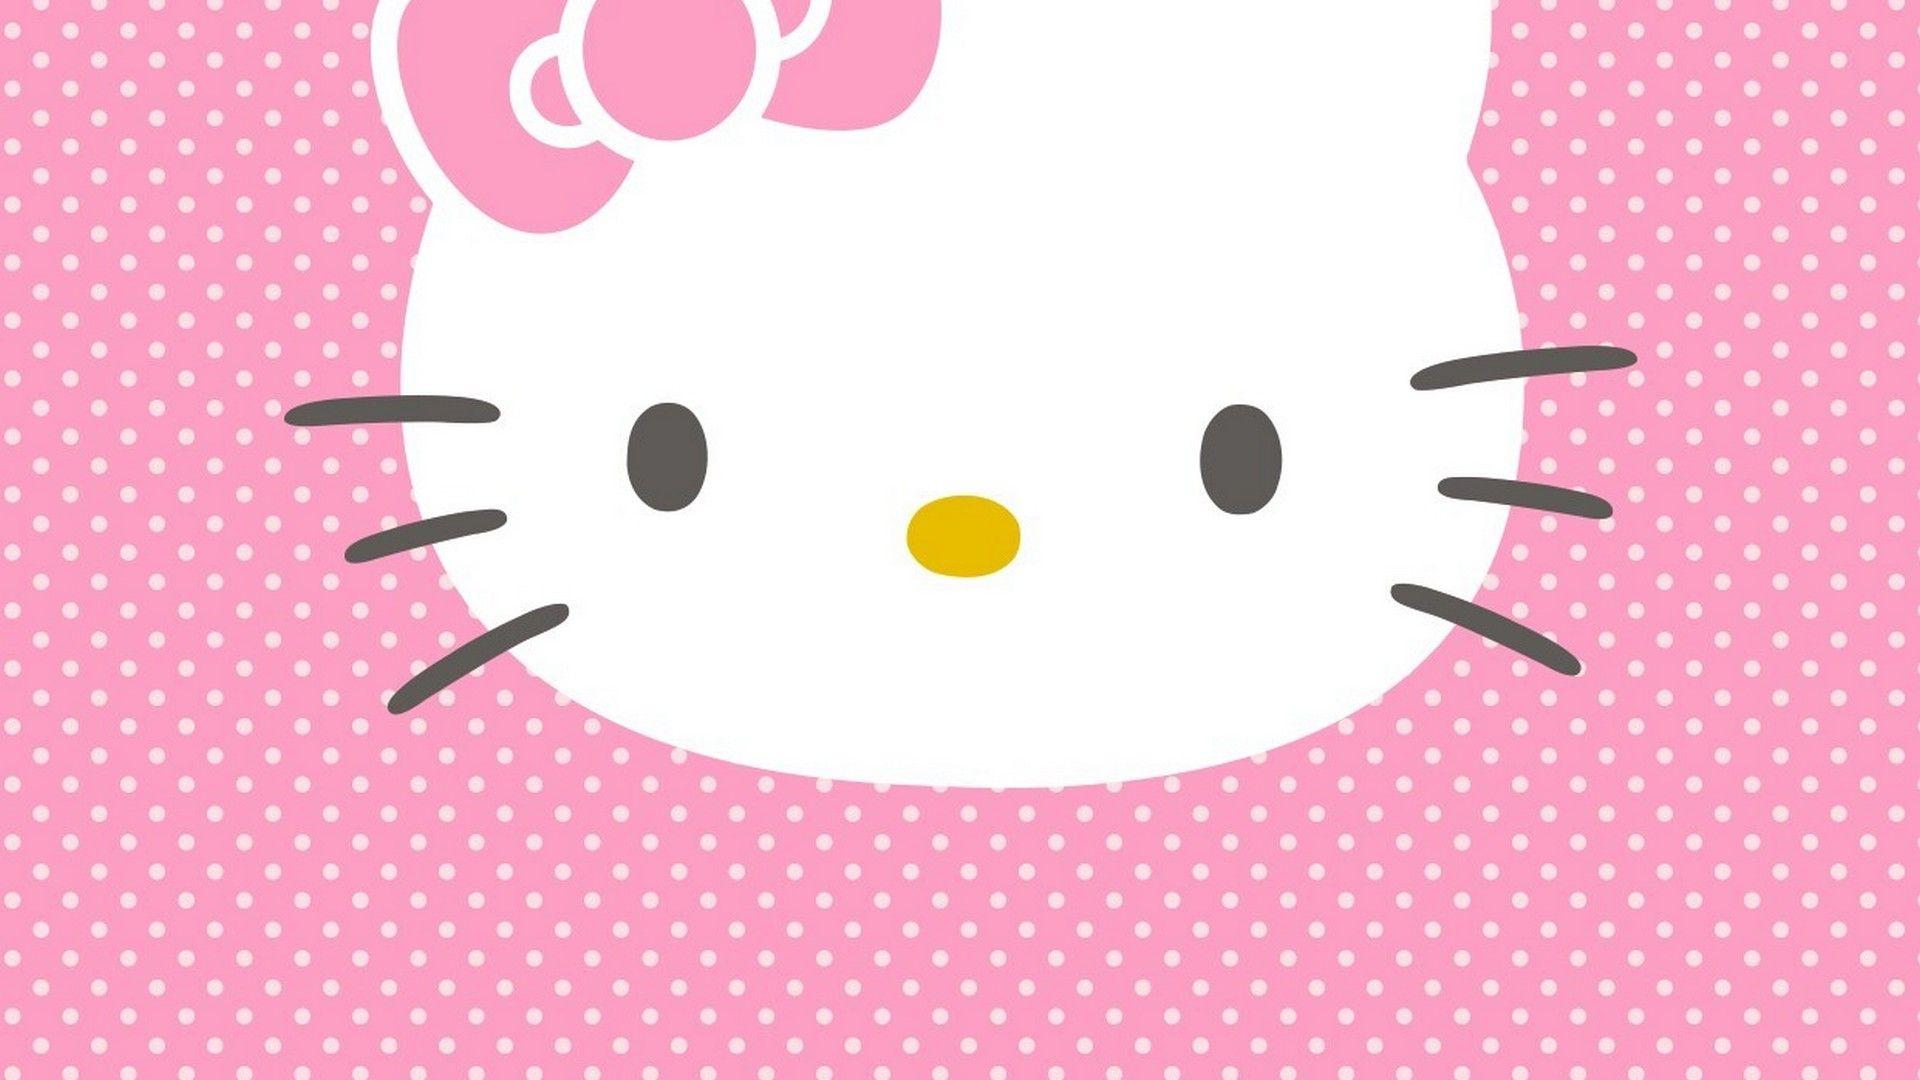 Hello Kitty Picture Desktop Background. Hello kitty